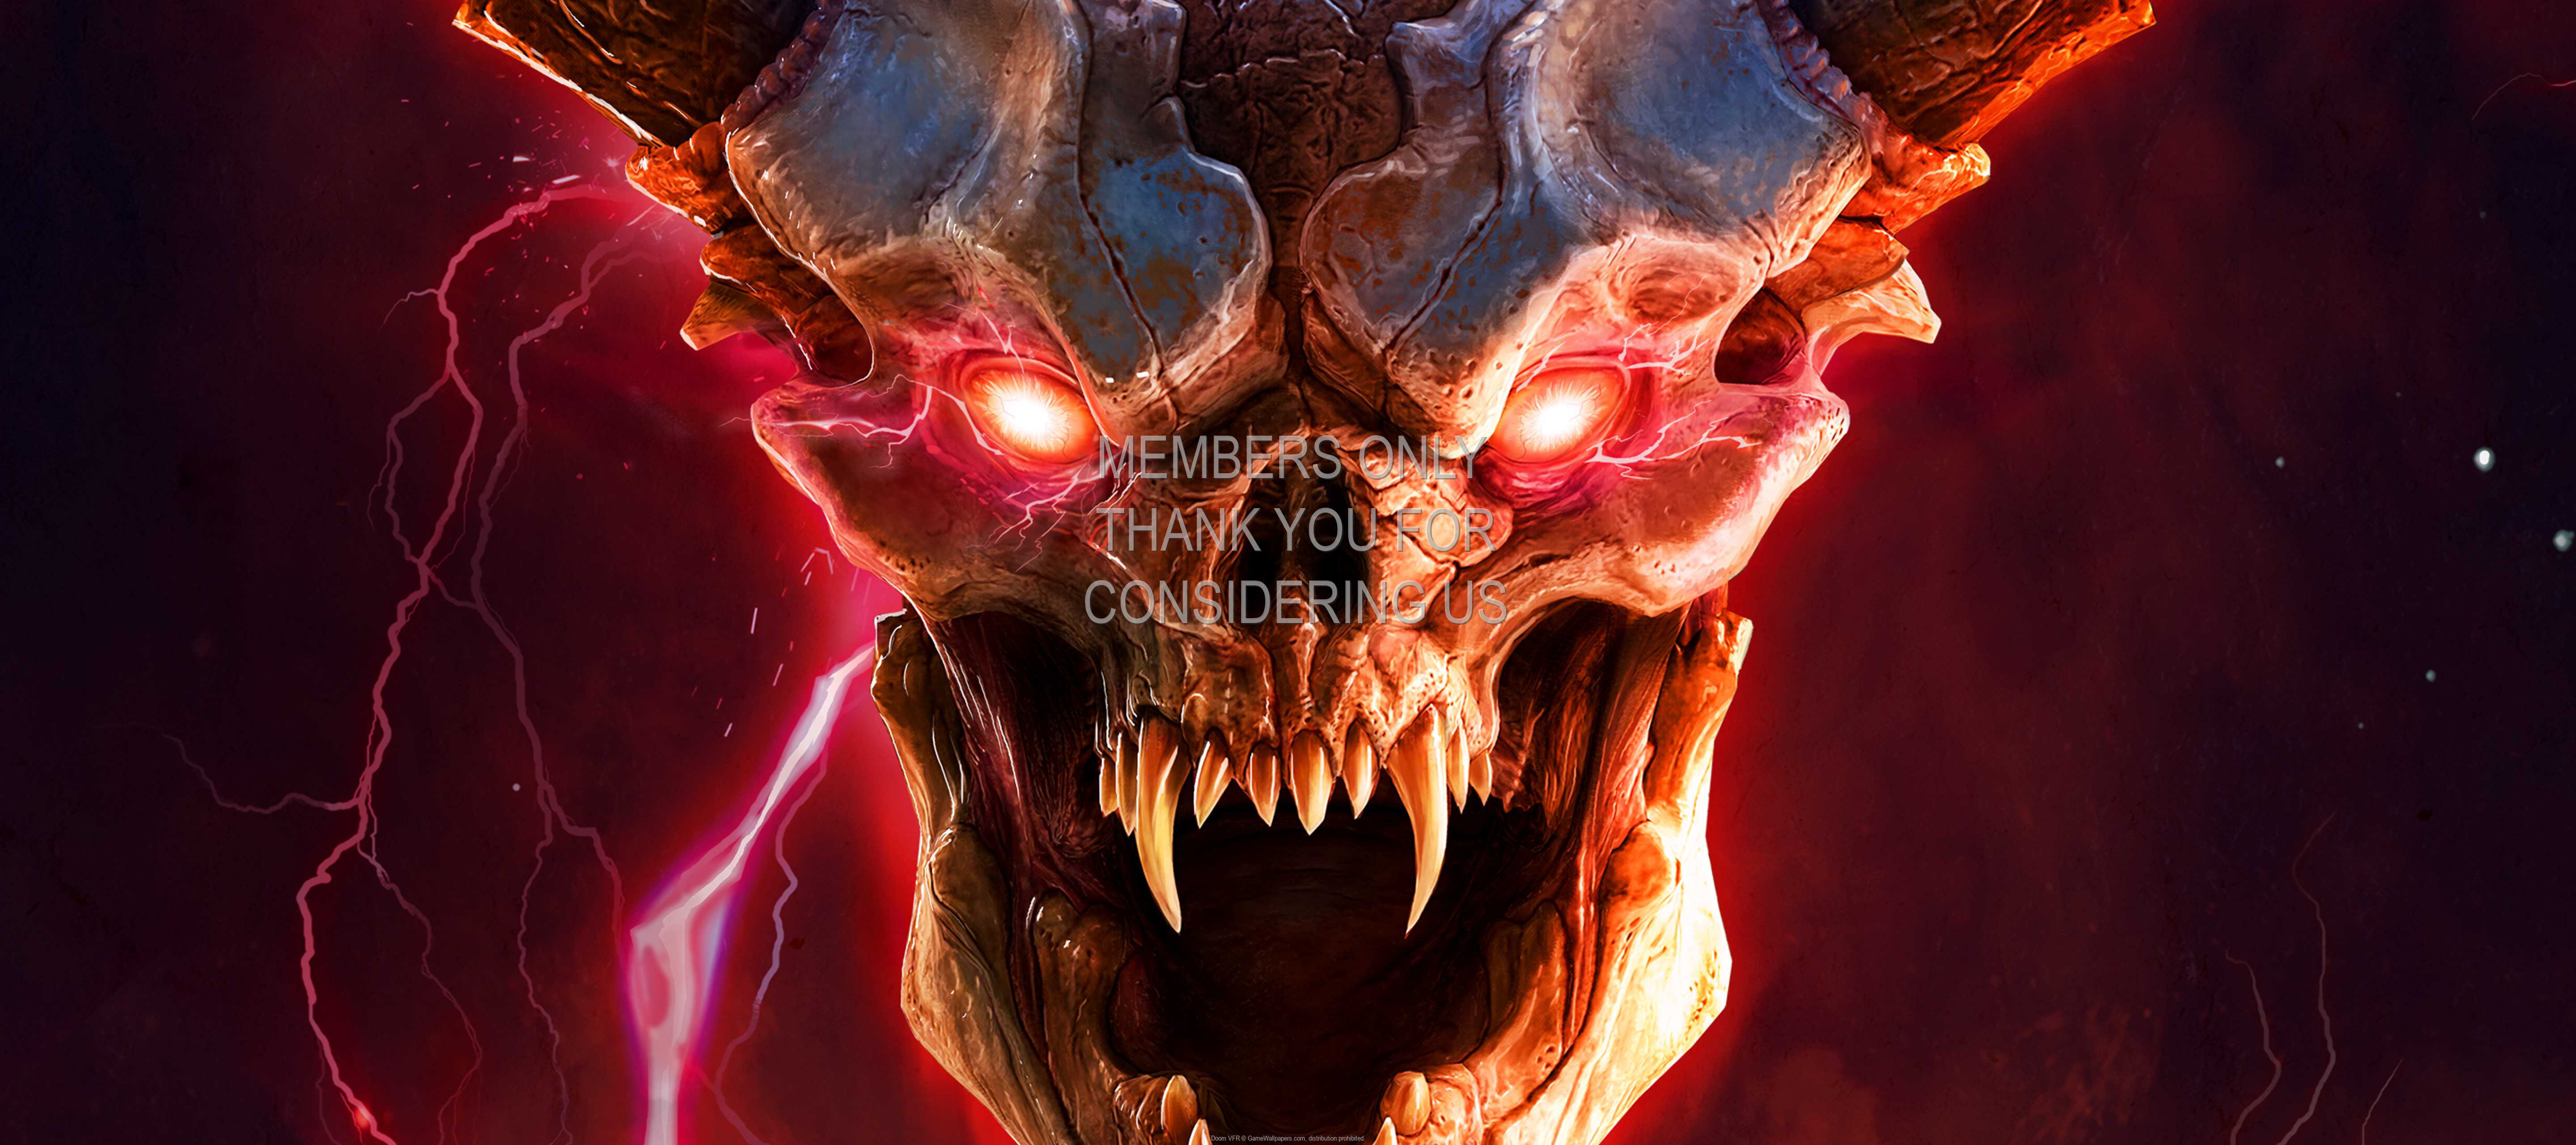 Doom VFR 1440p%20Horizontal Mobile wallpaper or background 01